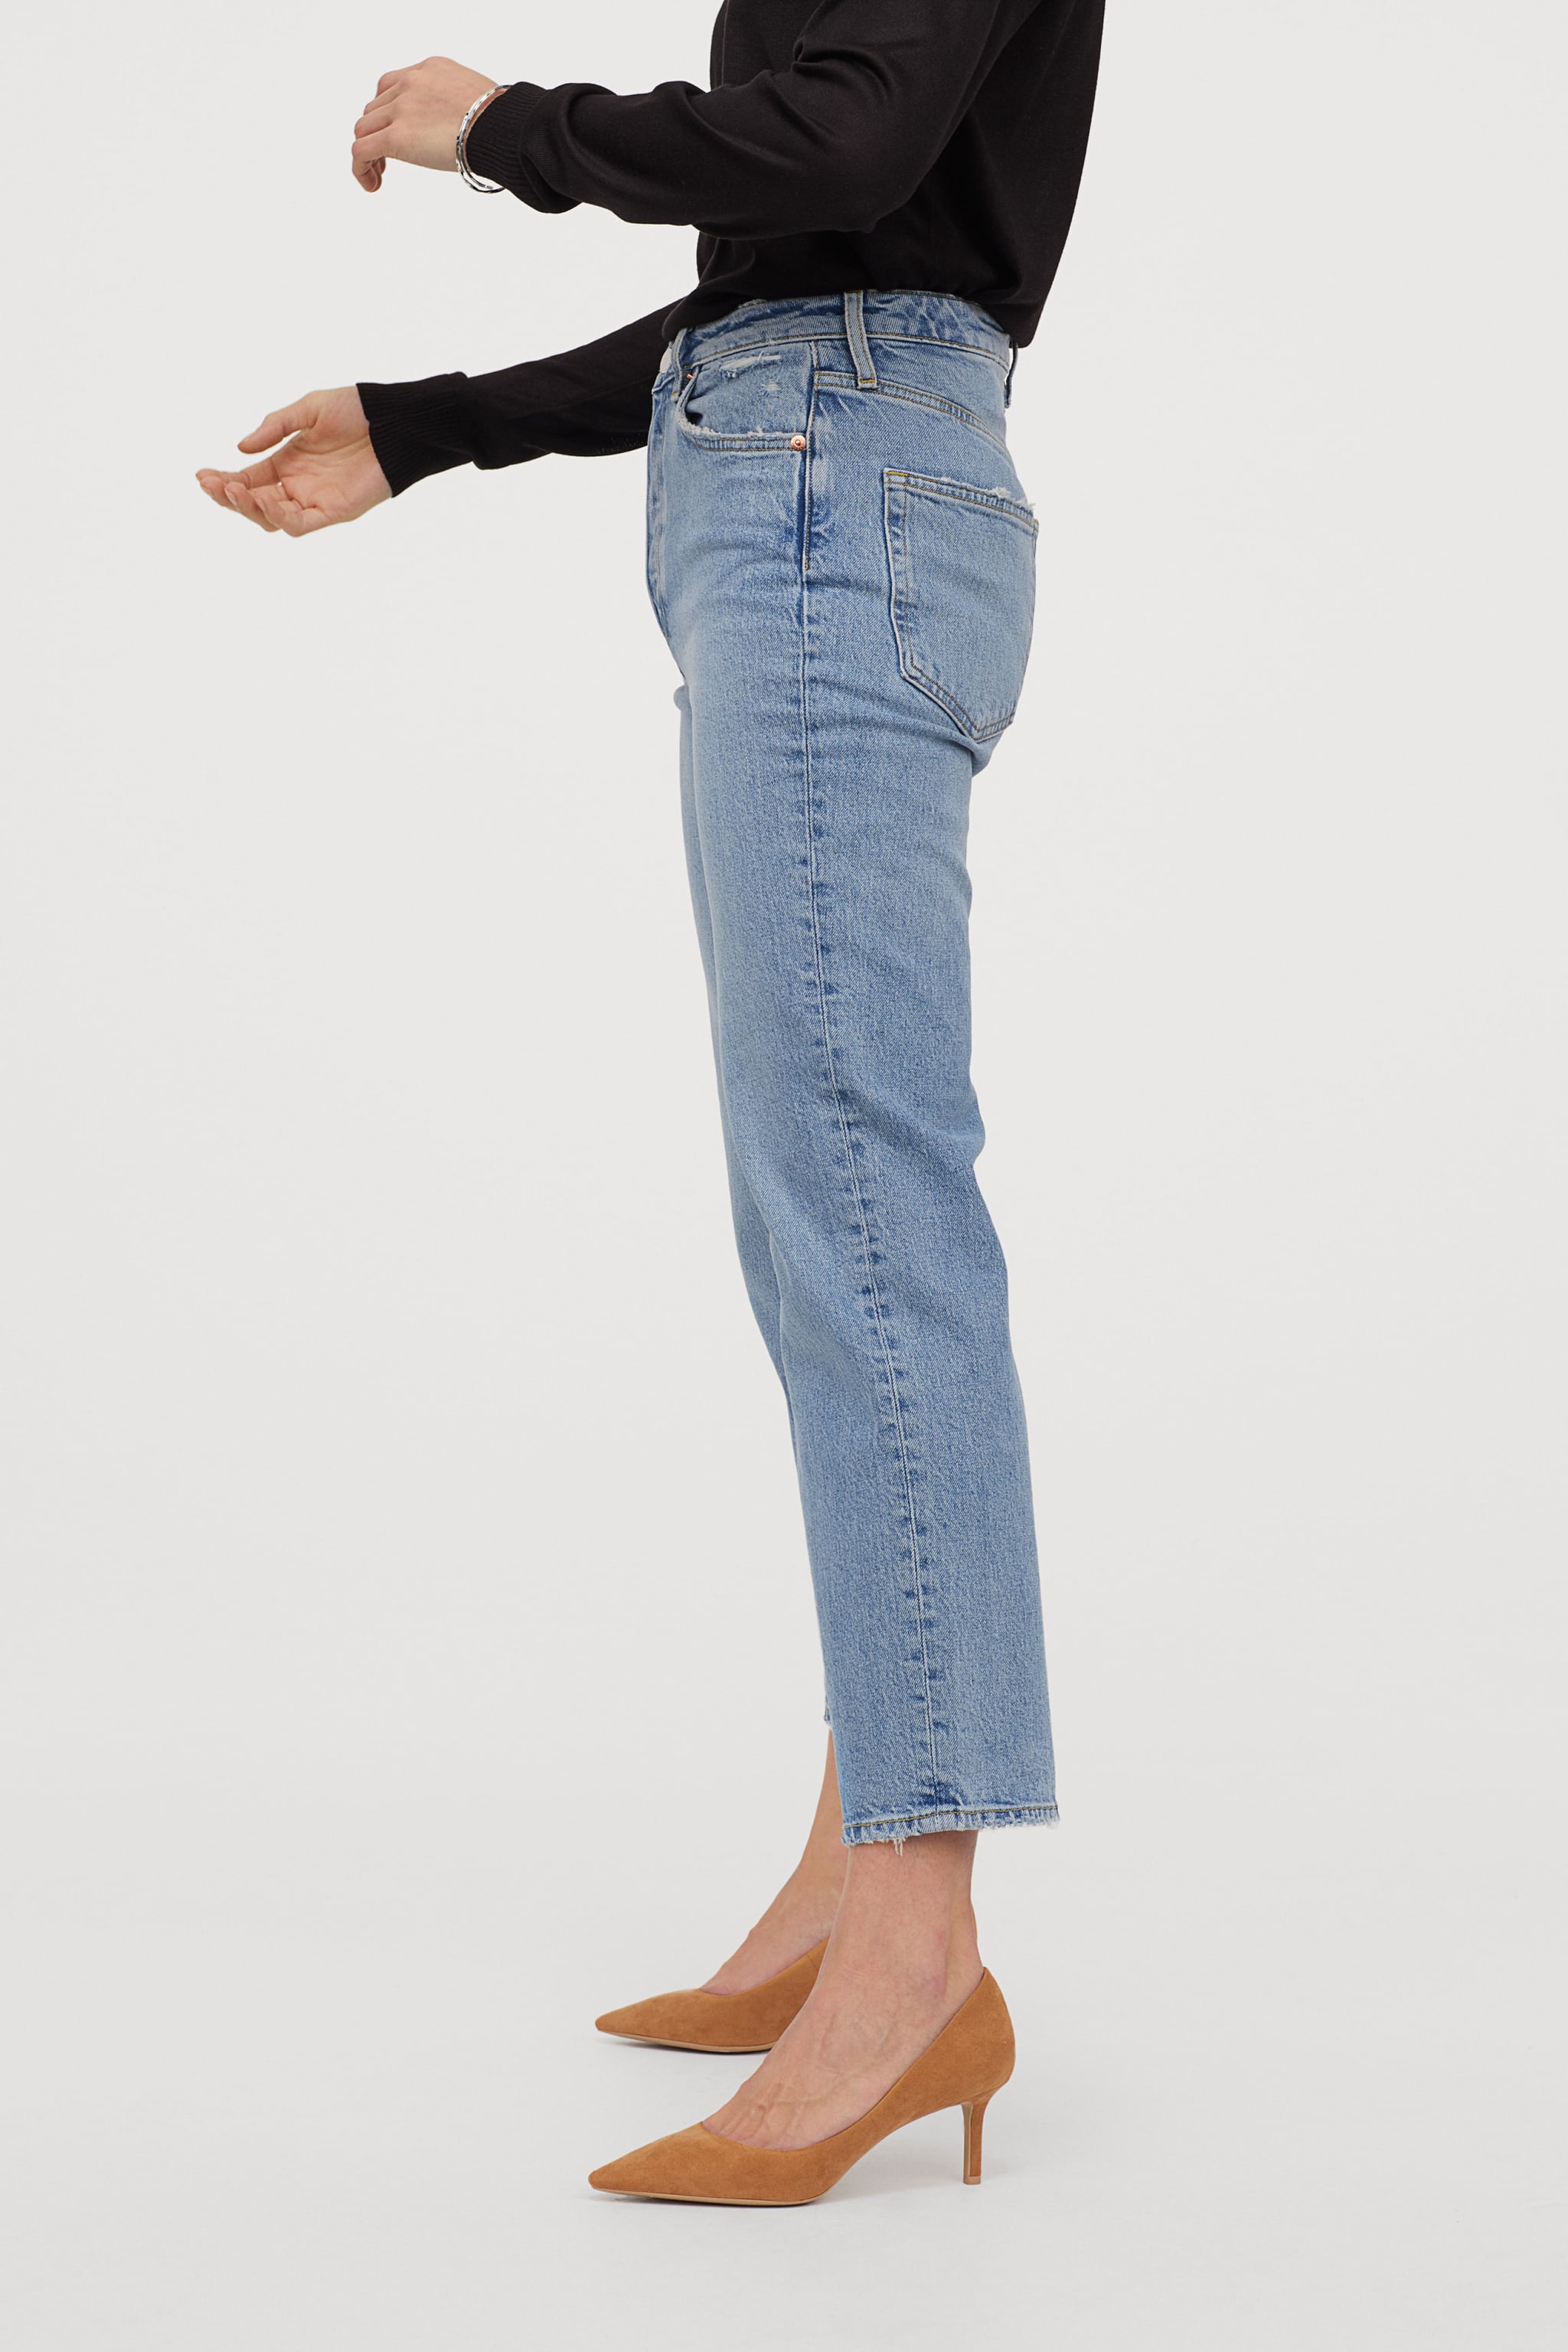 h&m jeans straight